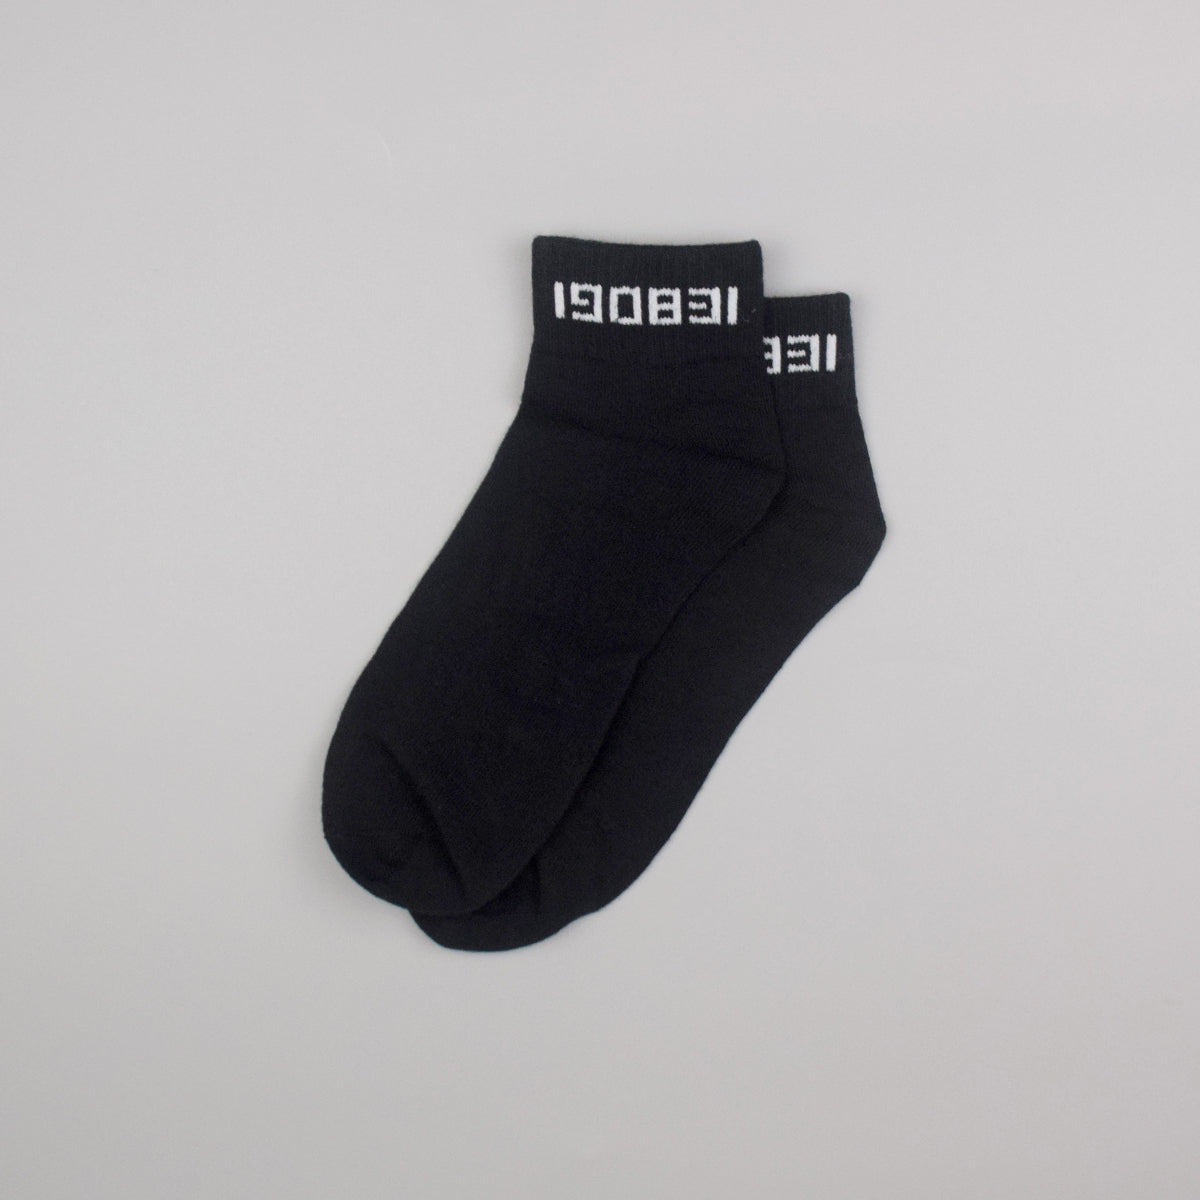 “190831” 8CM ANKLE SOCKS 「190831」8cm短襪